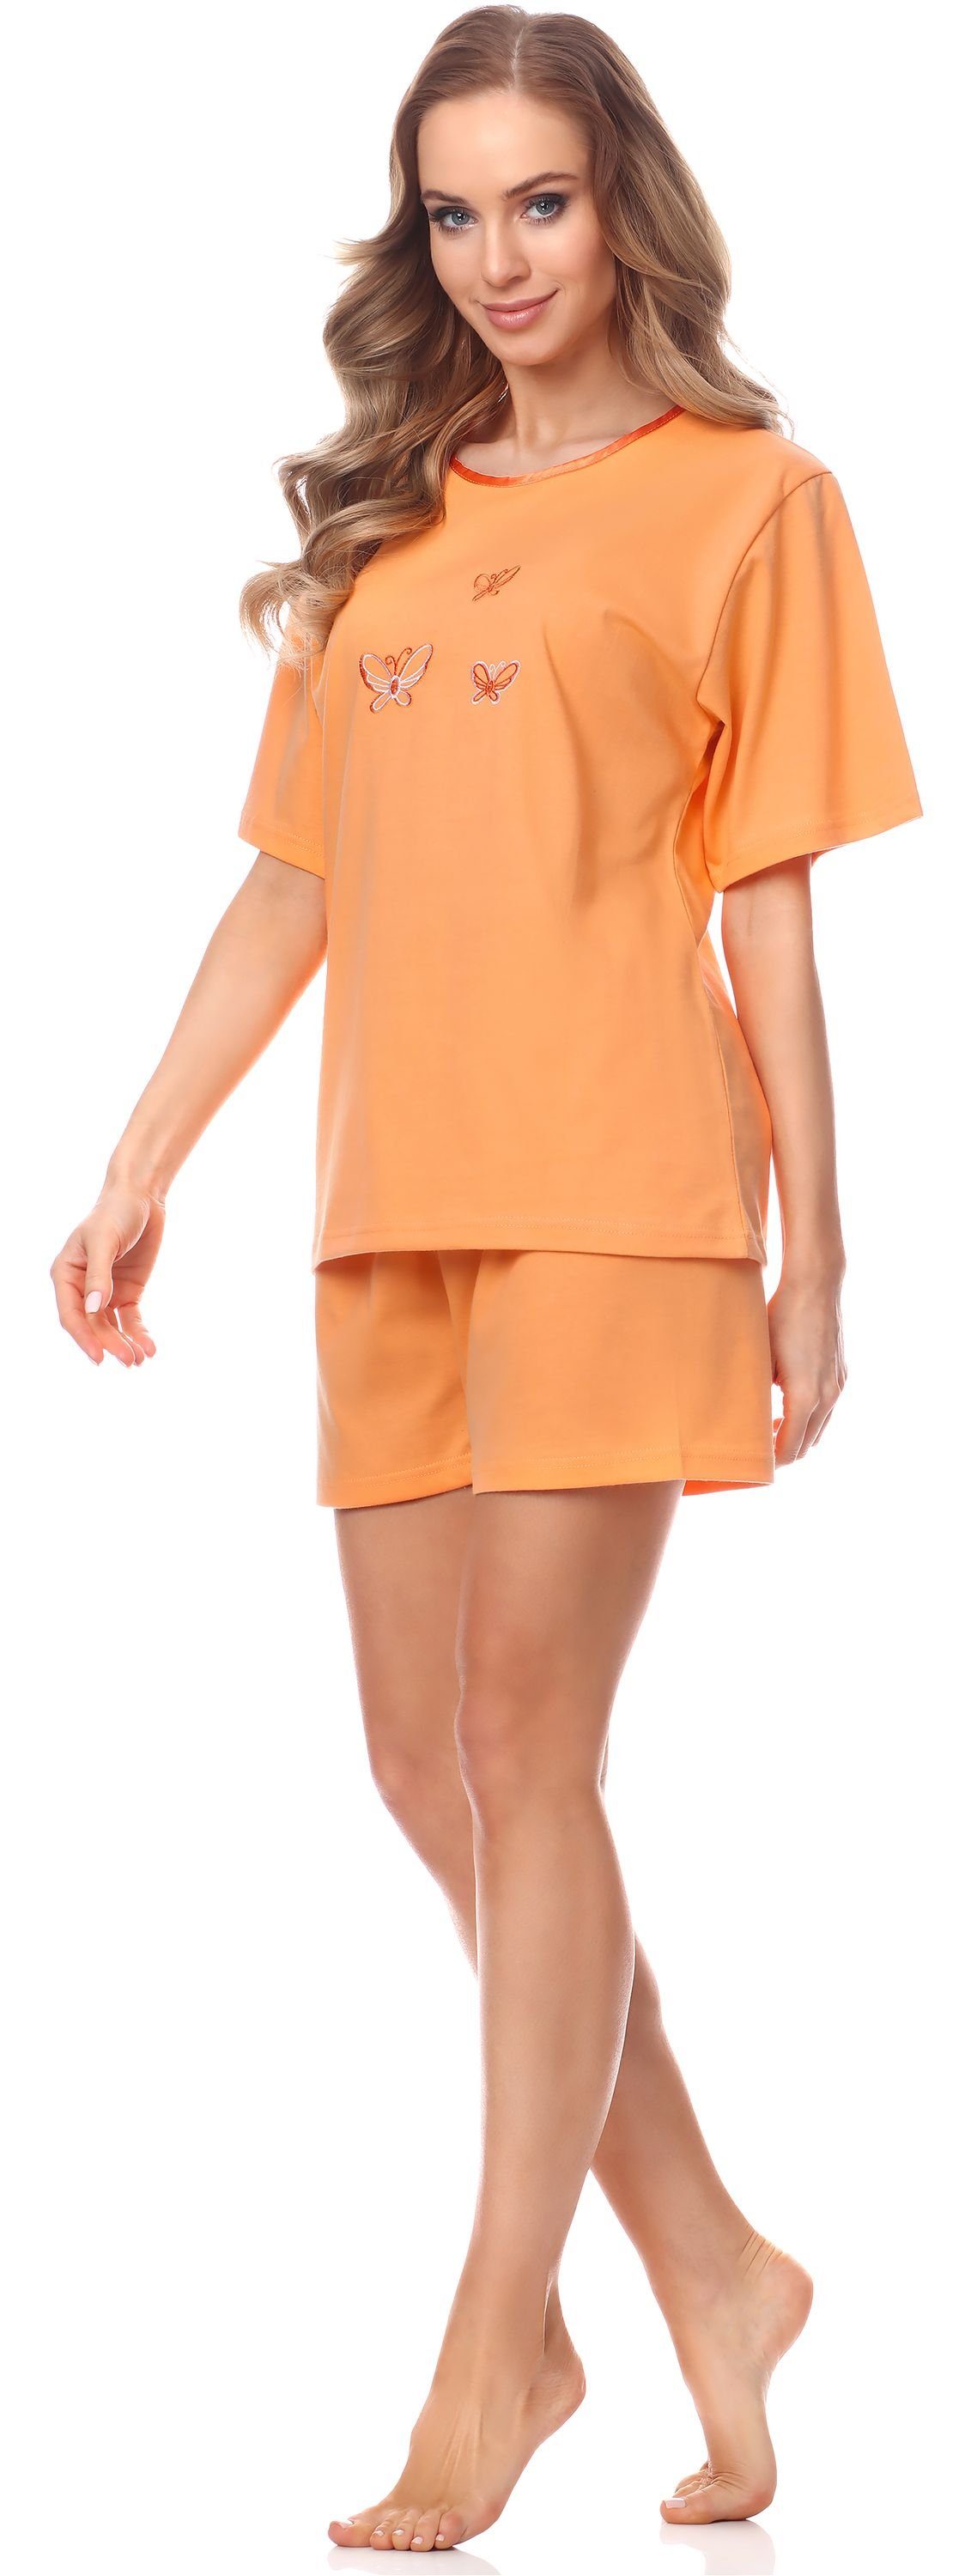 Merry Style Schlafanzug 91LW1 Damen (Kurzarm) Schlafanzug Kurzarm Orange